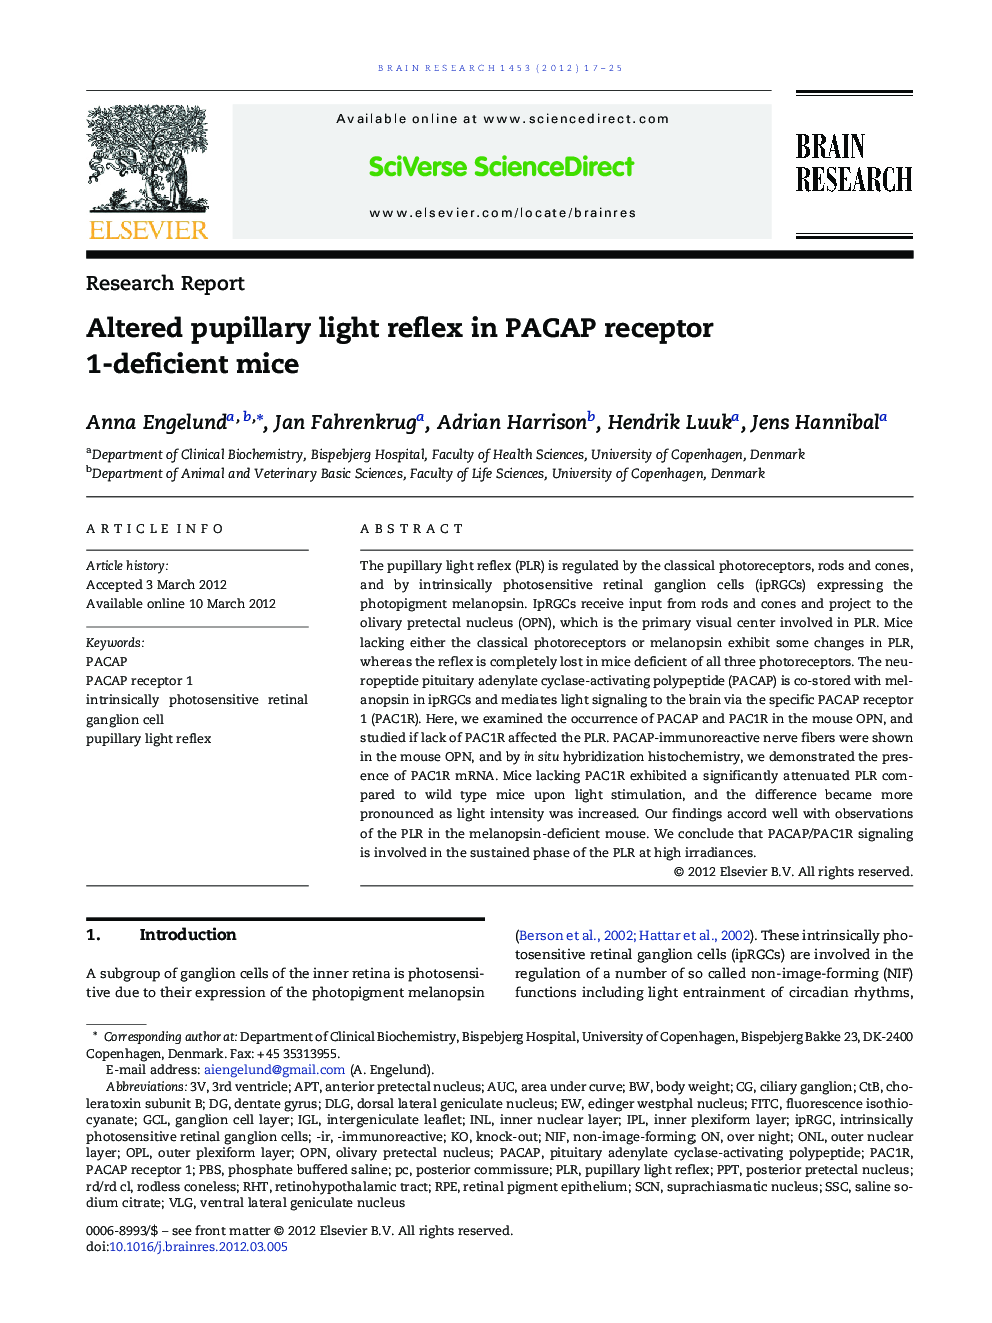 Research ReportAltered pupillary light reflex in PACAP receptor 1-deficient mice